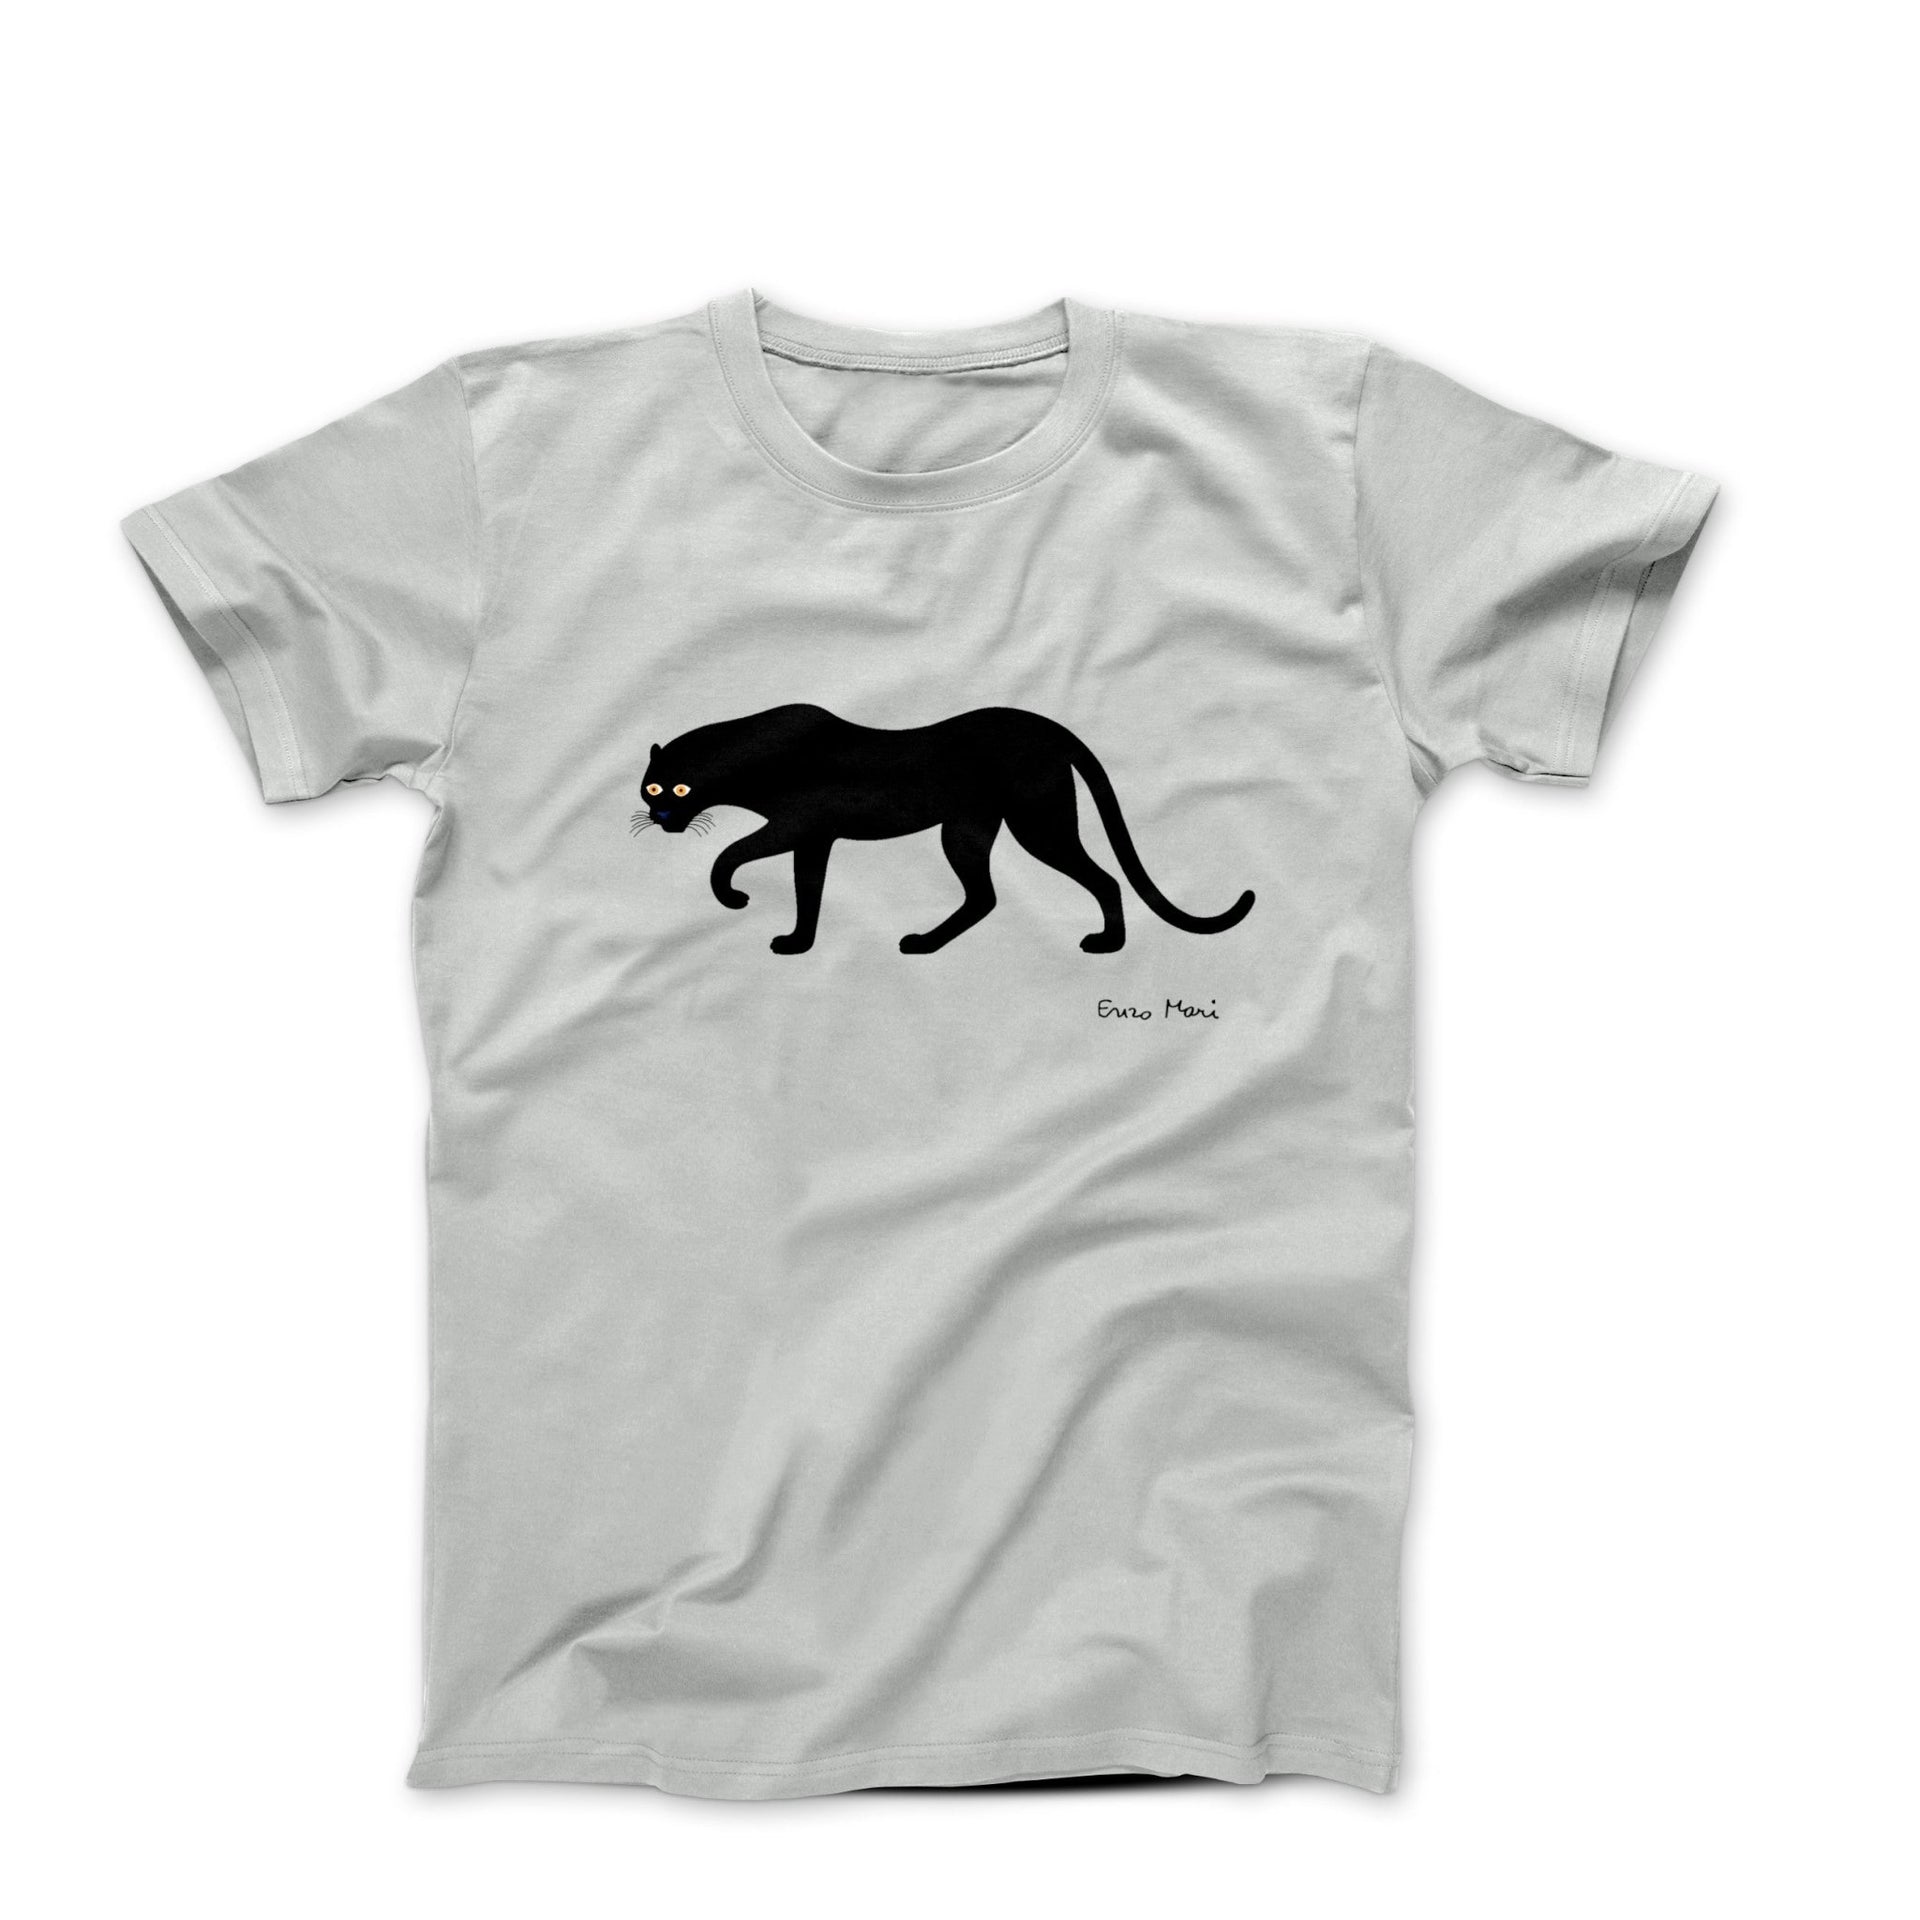 Enzo Mari La Pantera (The Panther) 1965 Art T-shirt - Clothing - Harvey Ltd